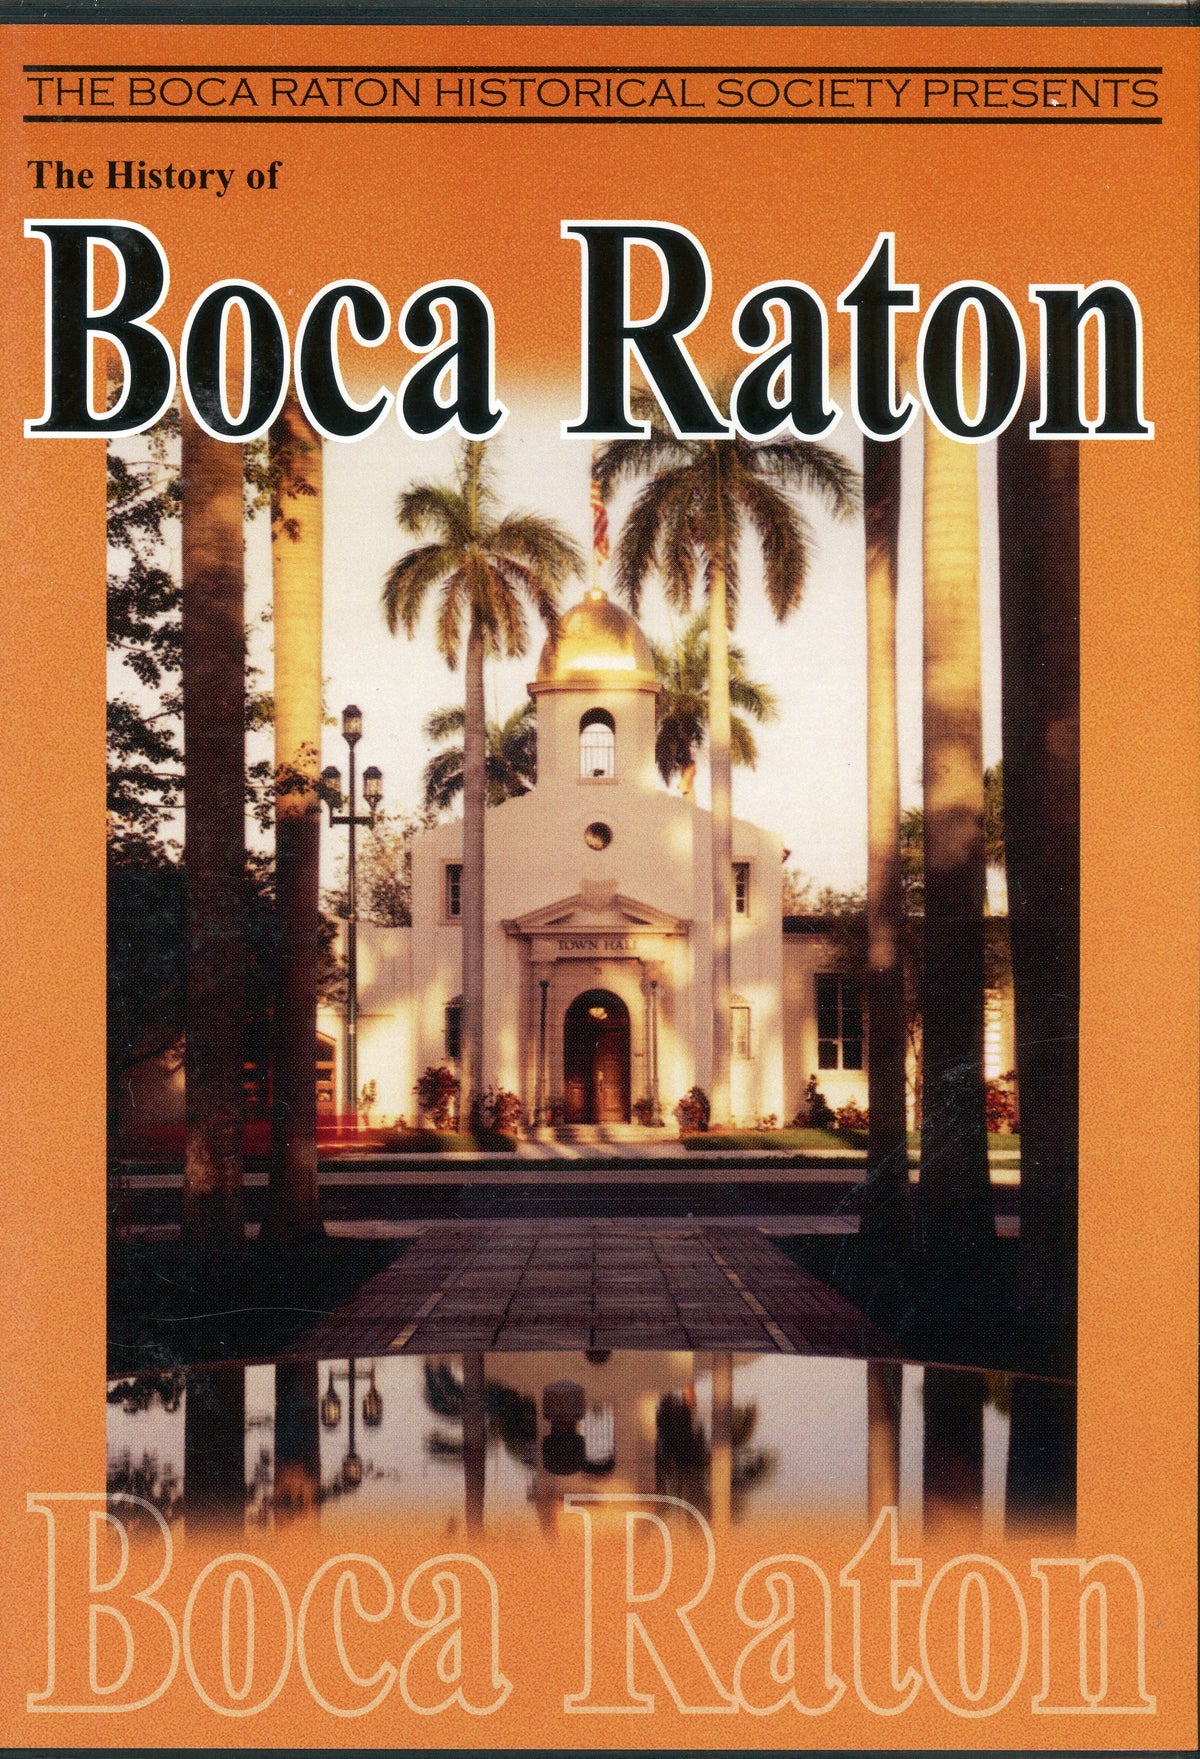 The History of Boca Raton DVD